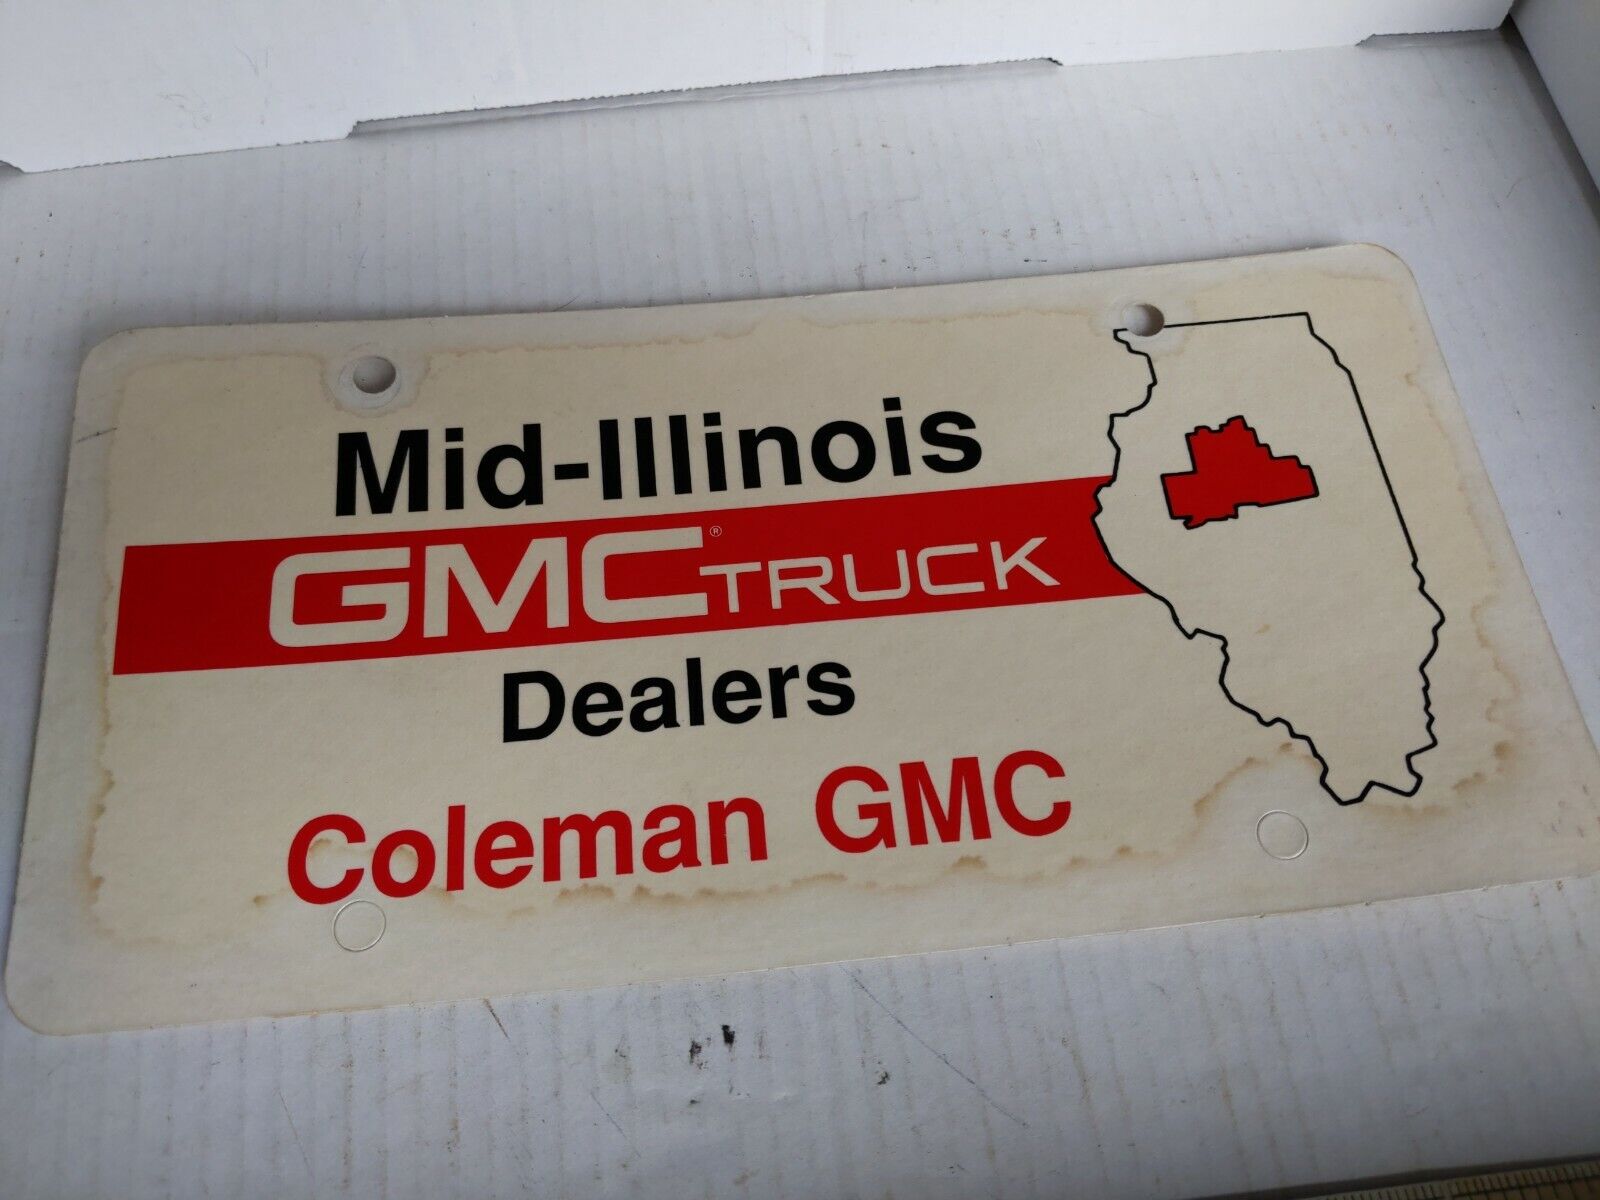 Vntge Coleman GMC mid Illinois advertising License Plate 